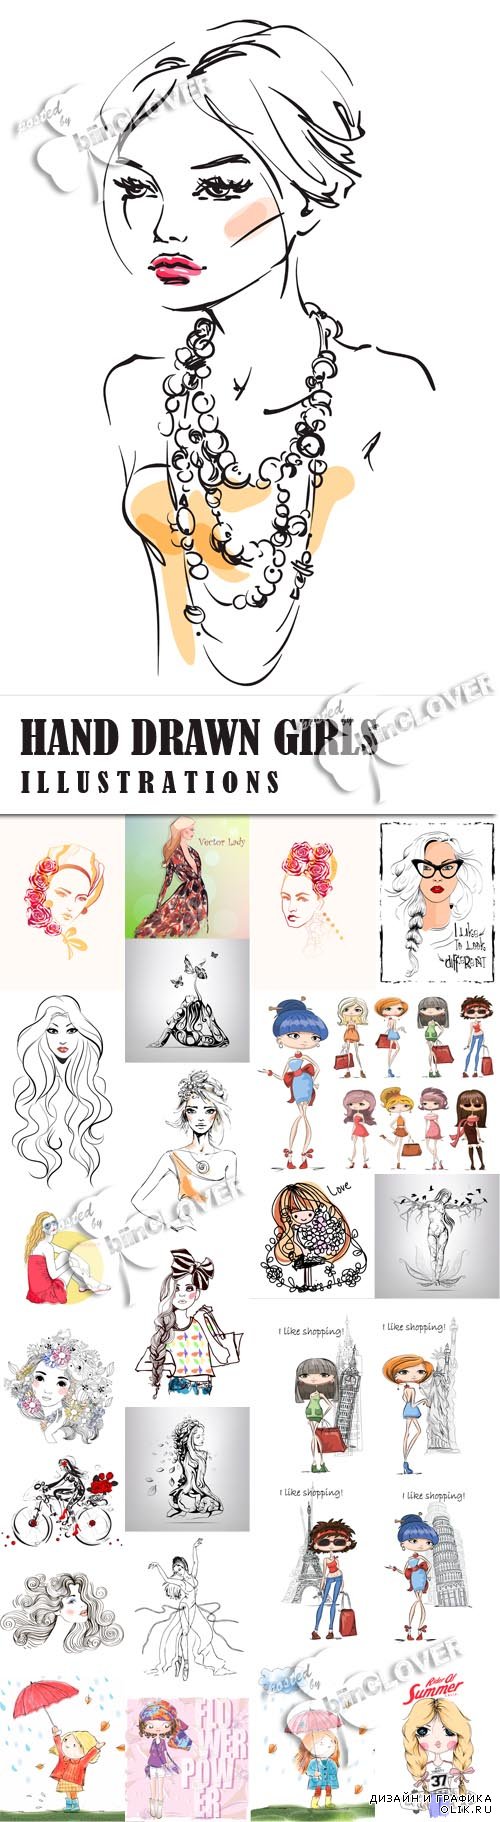 Hand drawn girl illustrations 0586